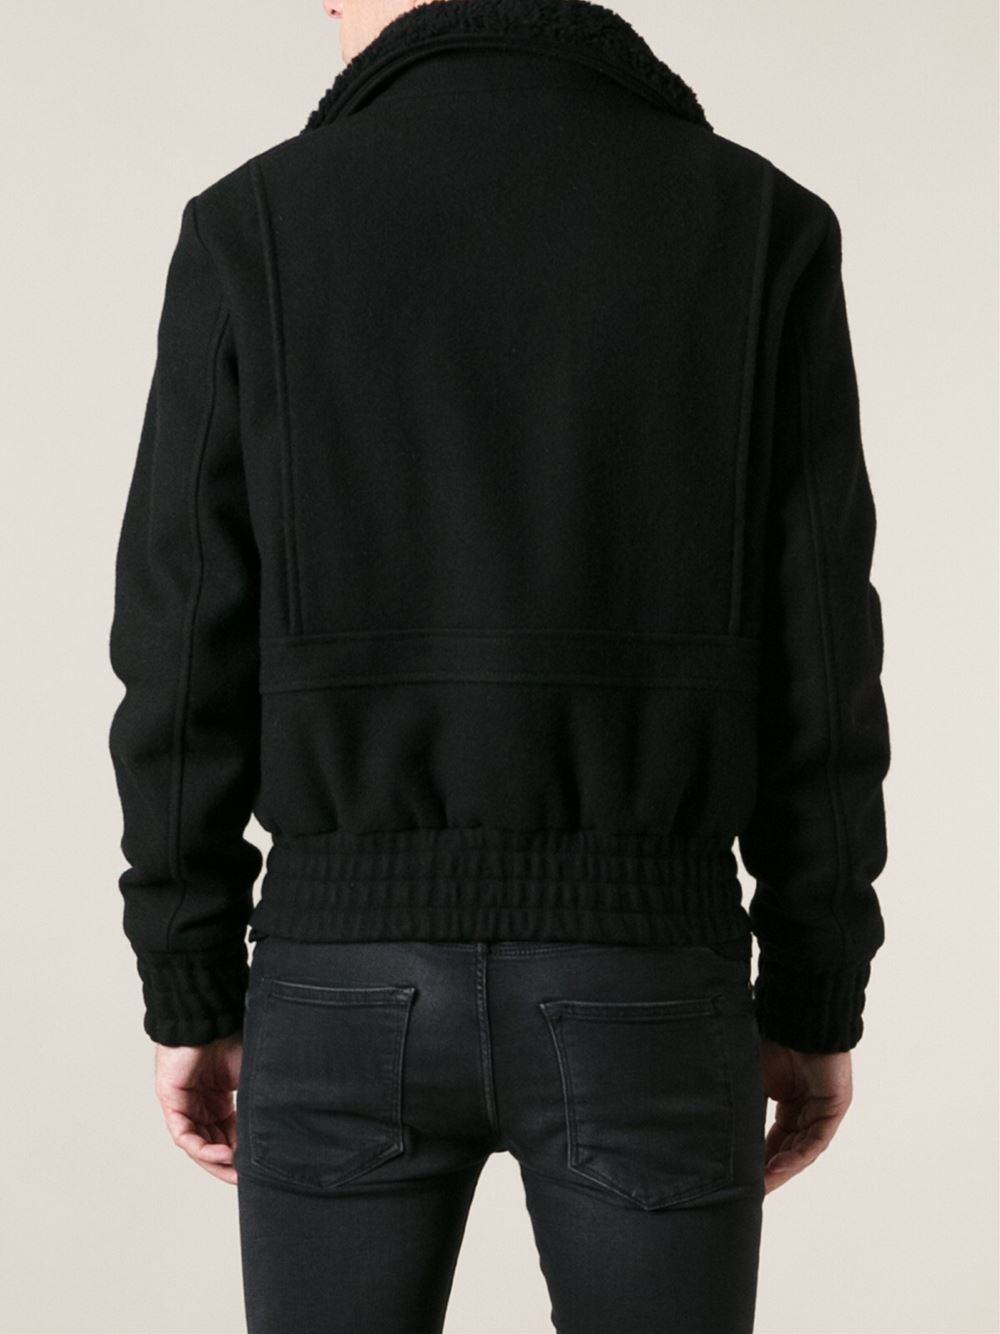 AMI Shearling Collar Jacket in Black for Men - Lyst